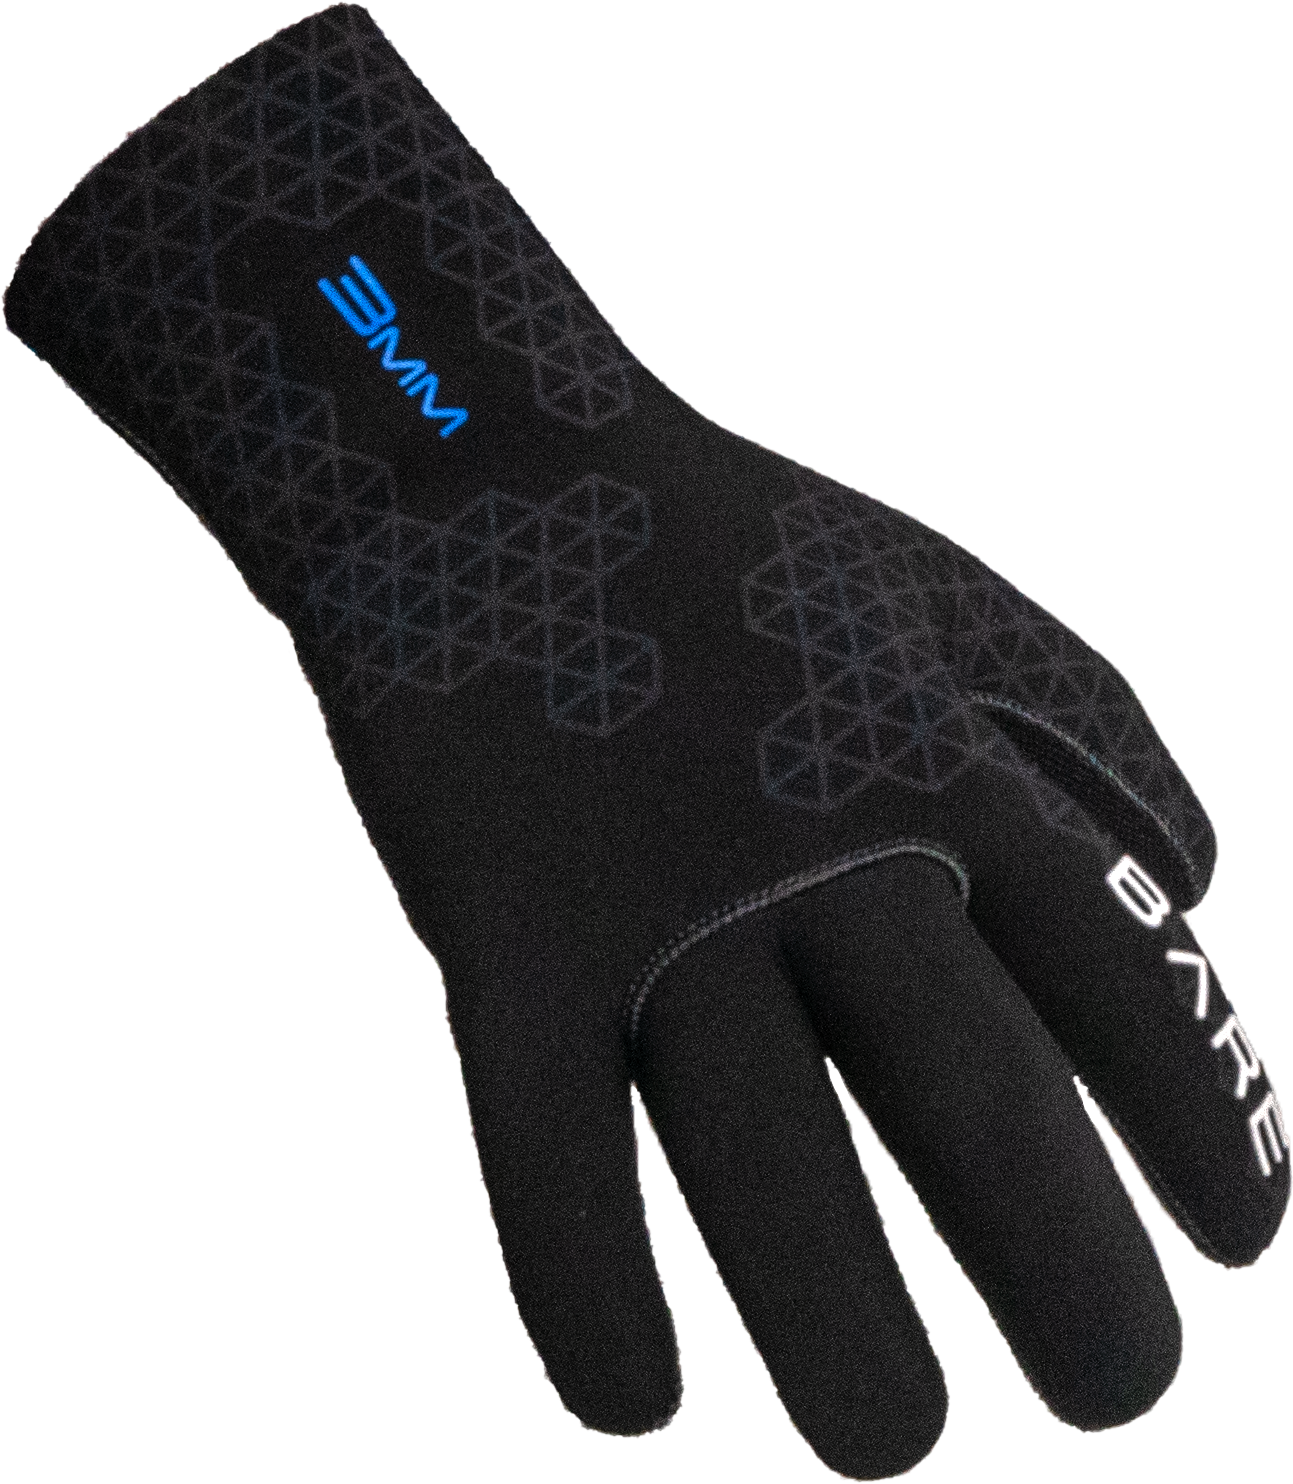 Bare 3mm S-Flex Glove, Black